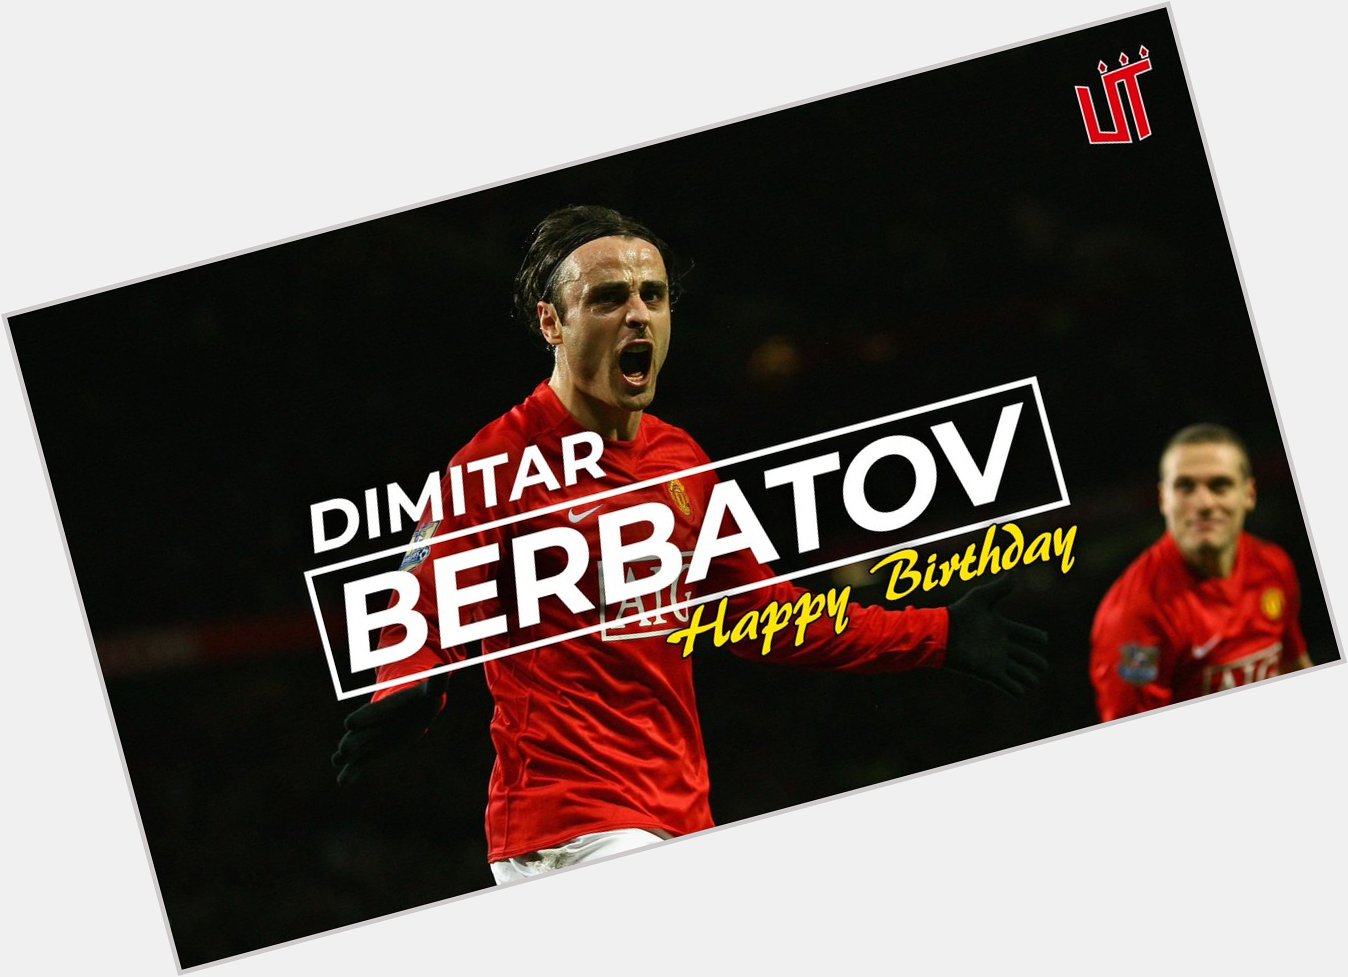 Happy birthday to Dimitar Berbatov!  